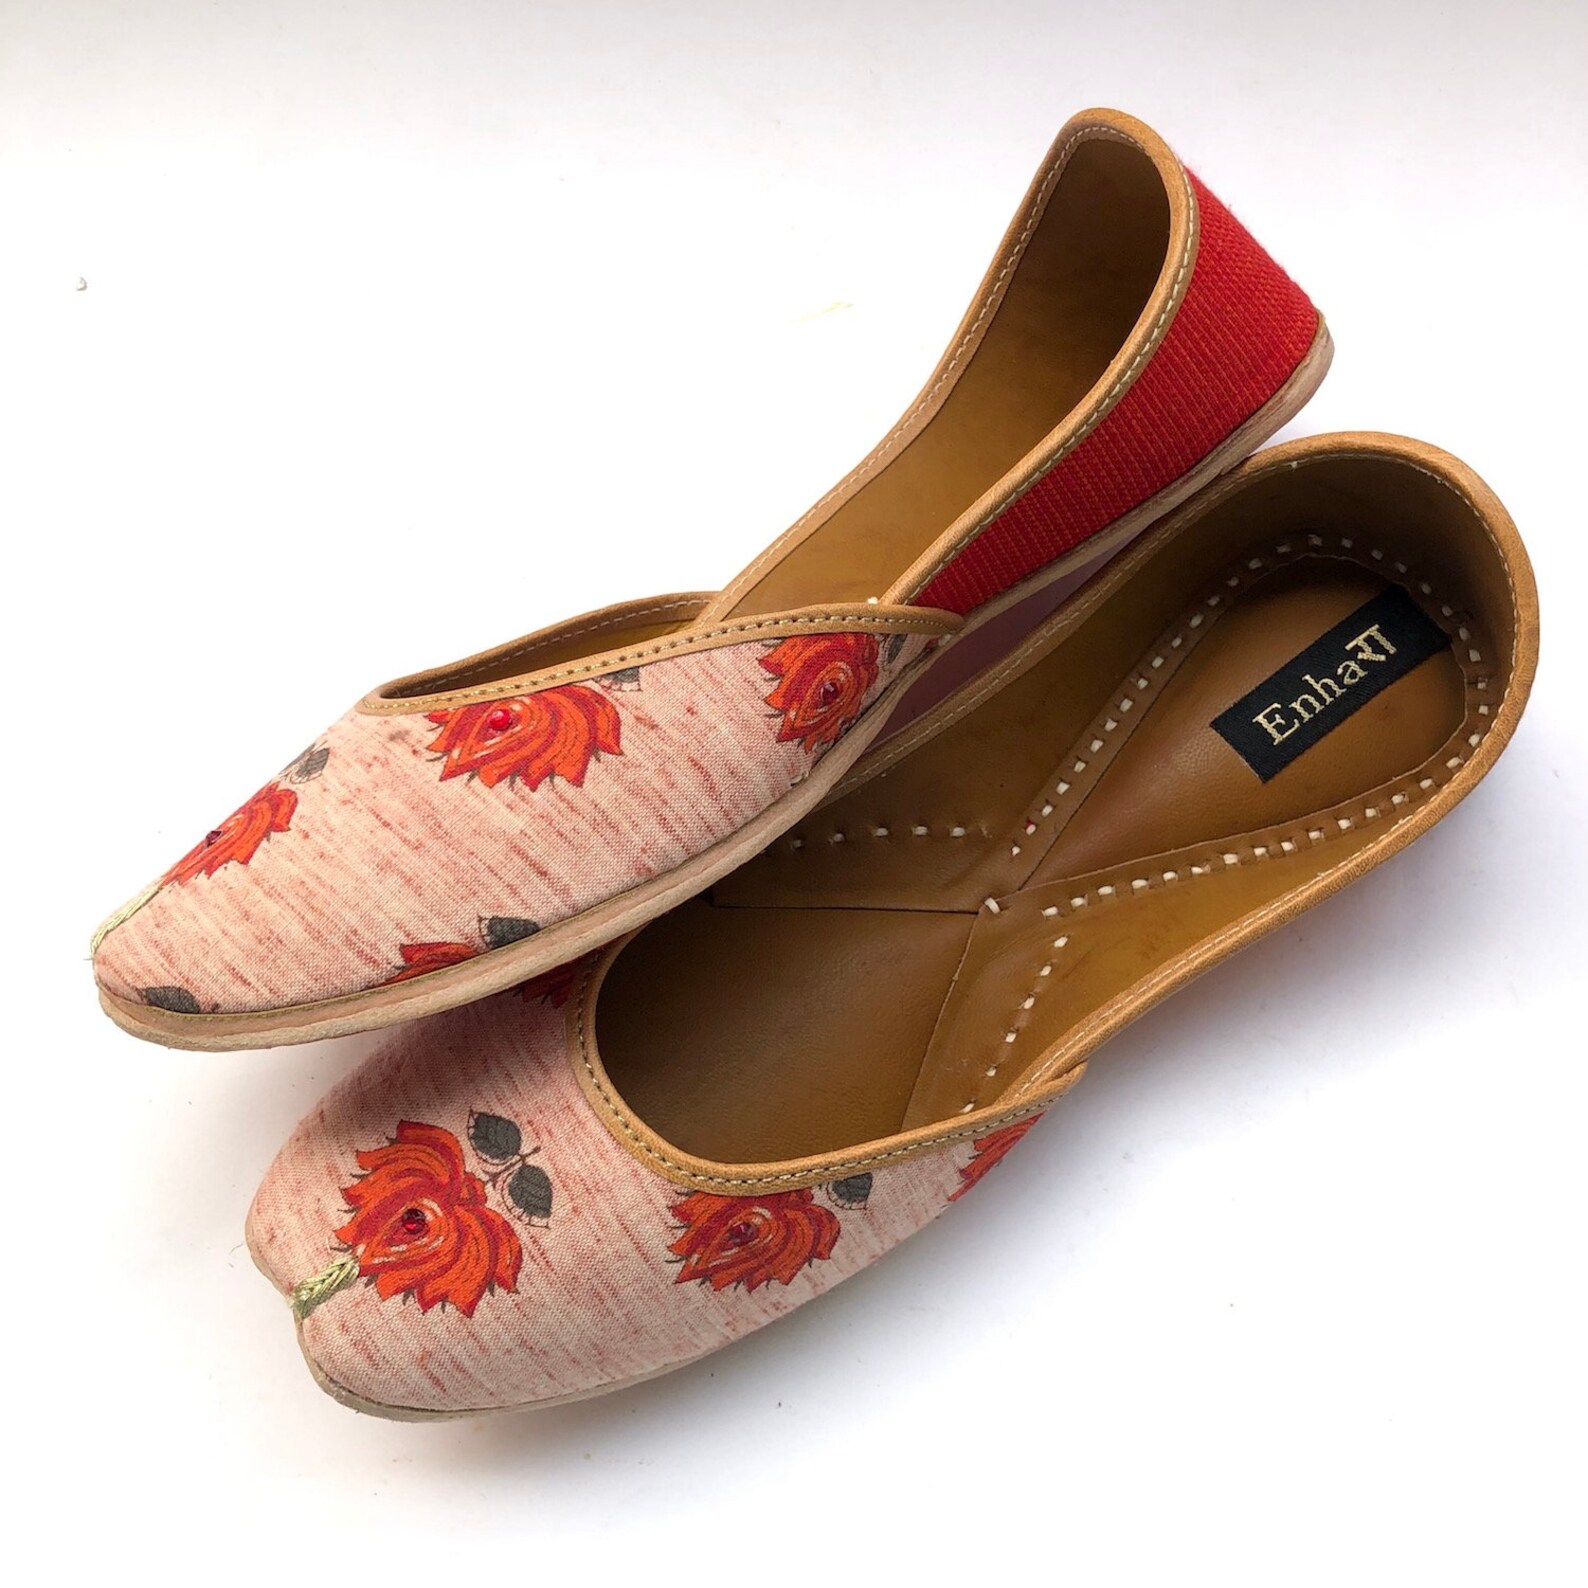 red lotus shoes for women, flat slip on shoes, indian shoes, ballet shoes, handmade designer shoes/juttis or mojaris